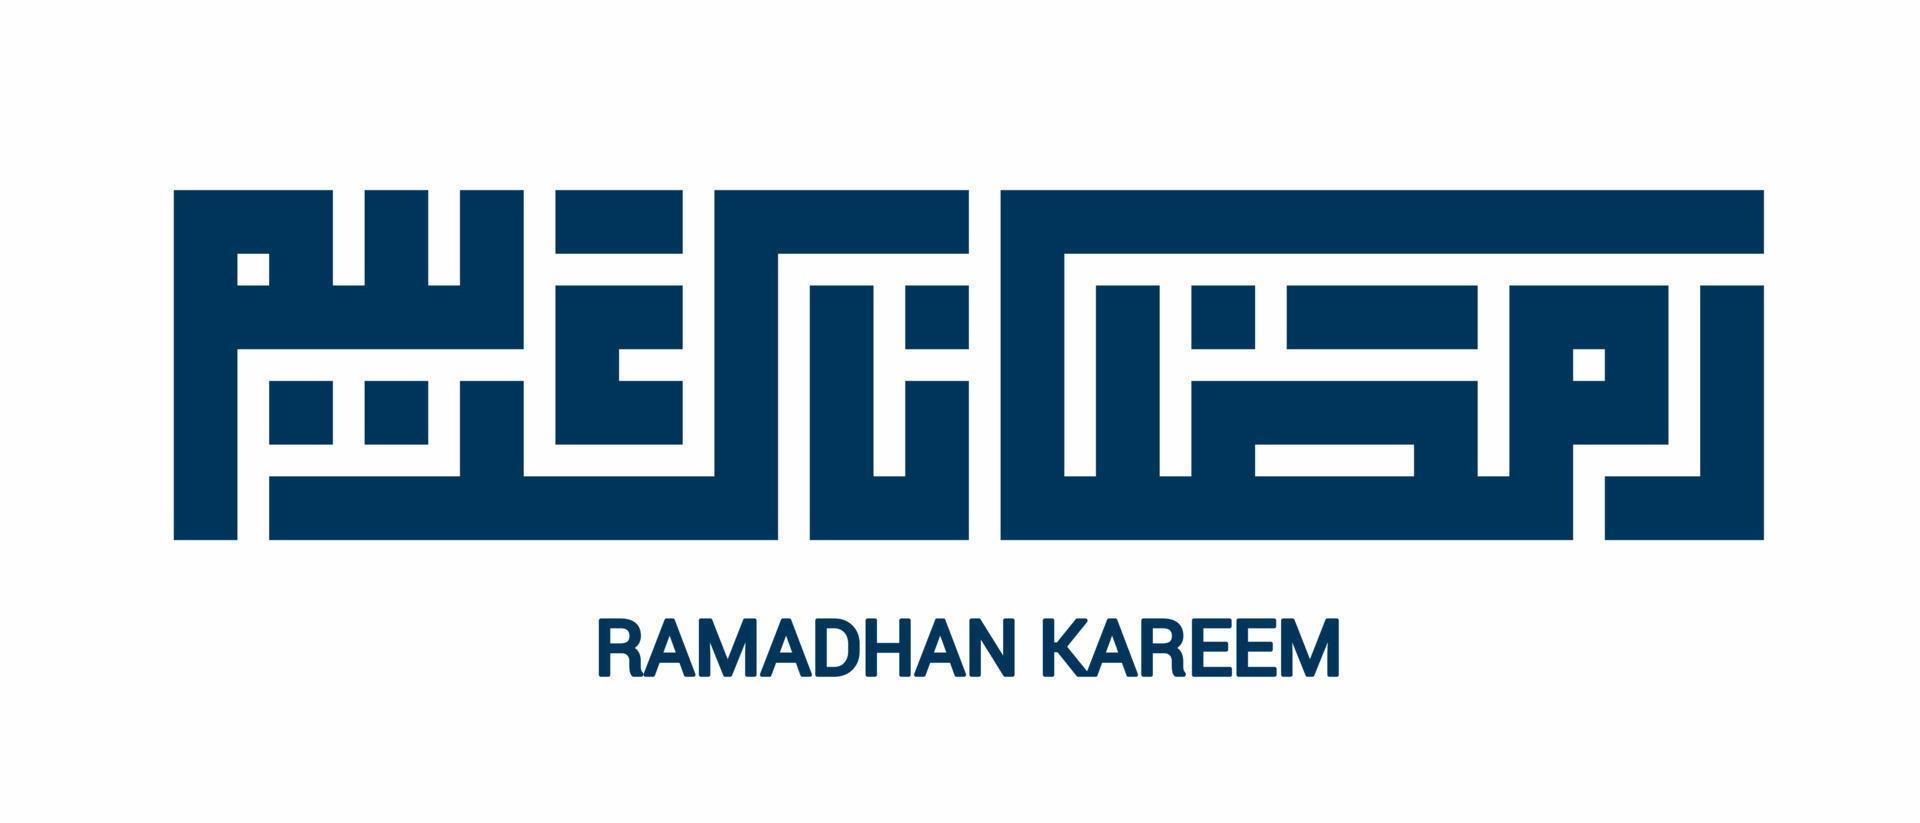 arabisk kufi kalligrafi ramadan kareem vektor